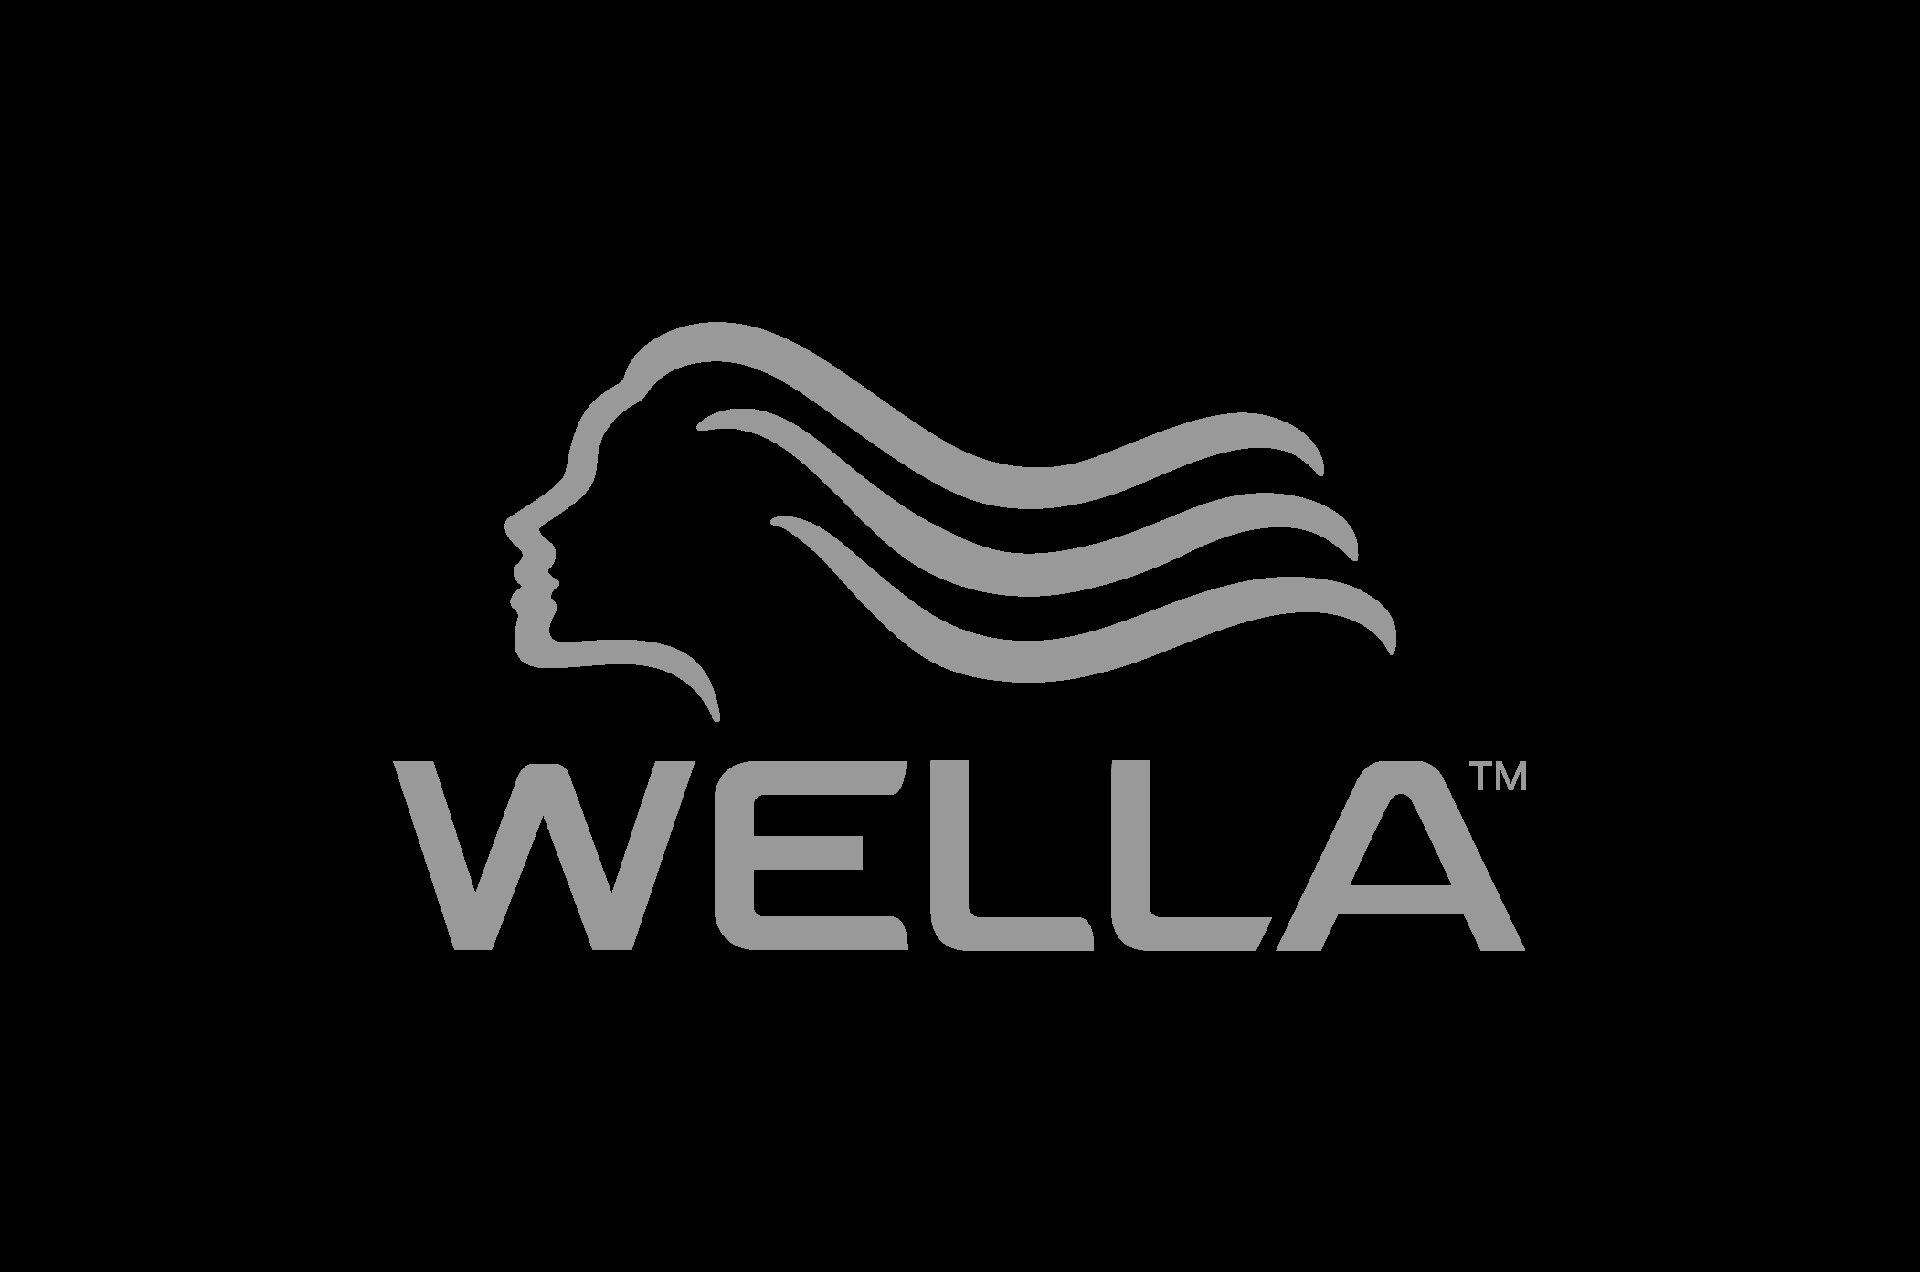 Wella Logo.jpg